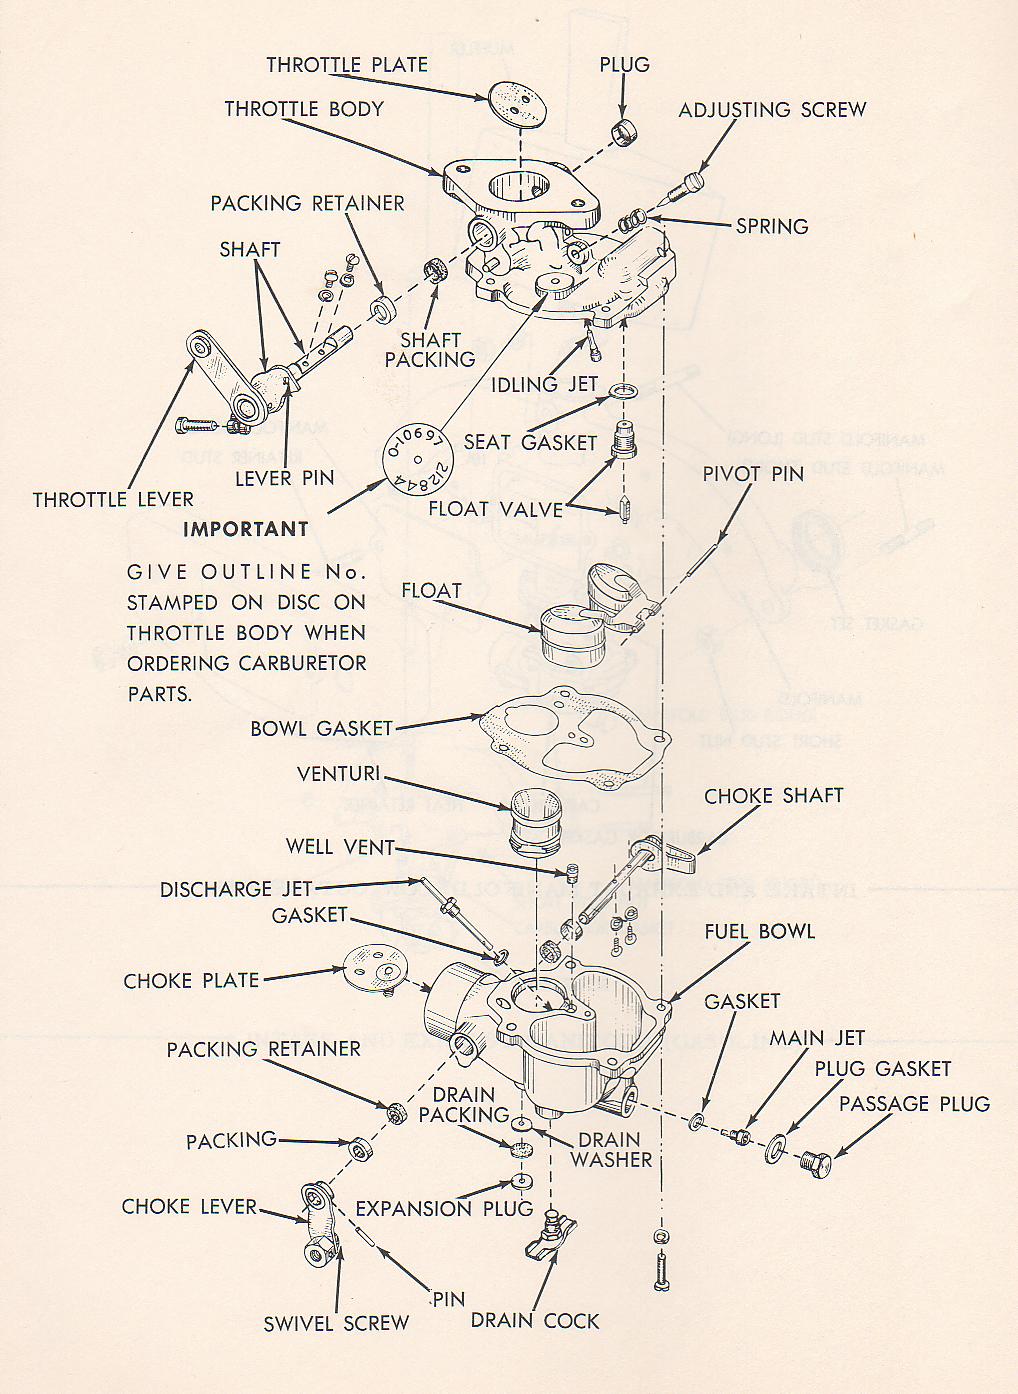 wiring diagram for a 1950 farmall h